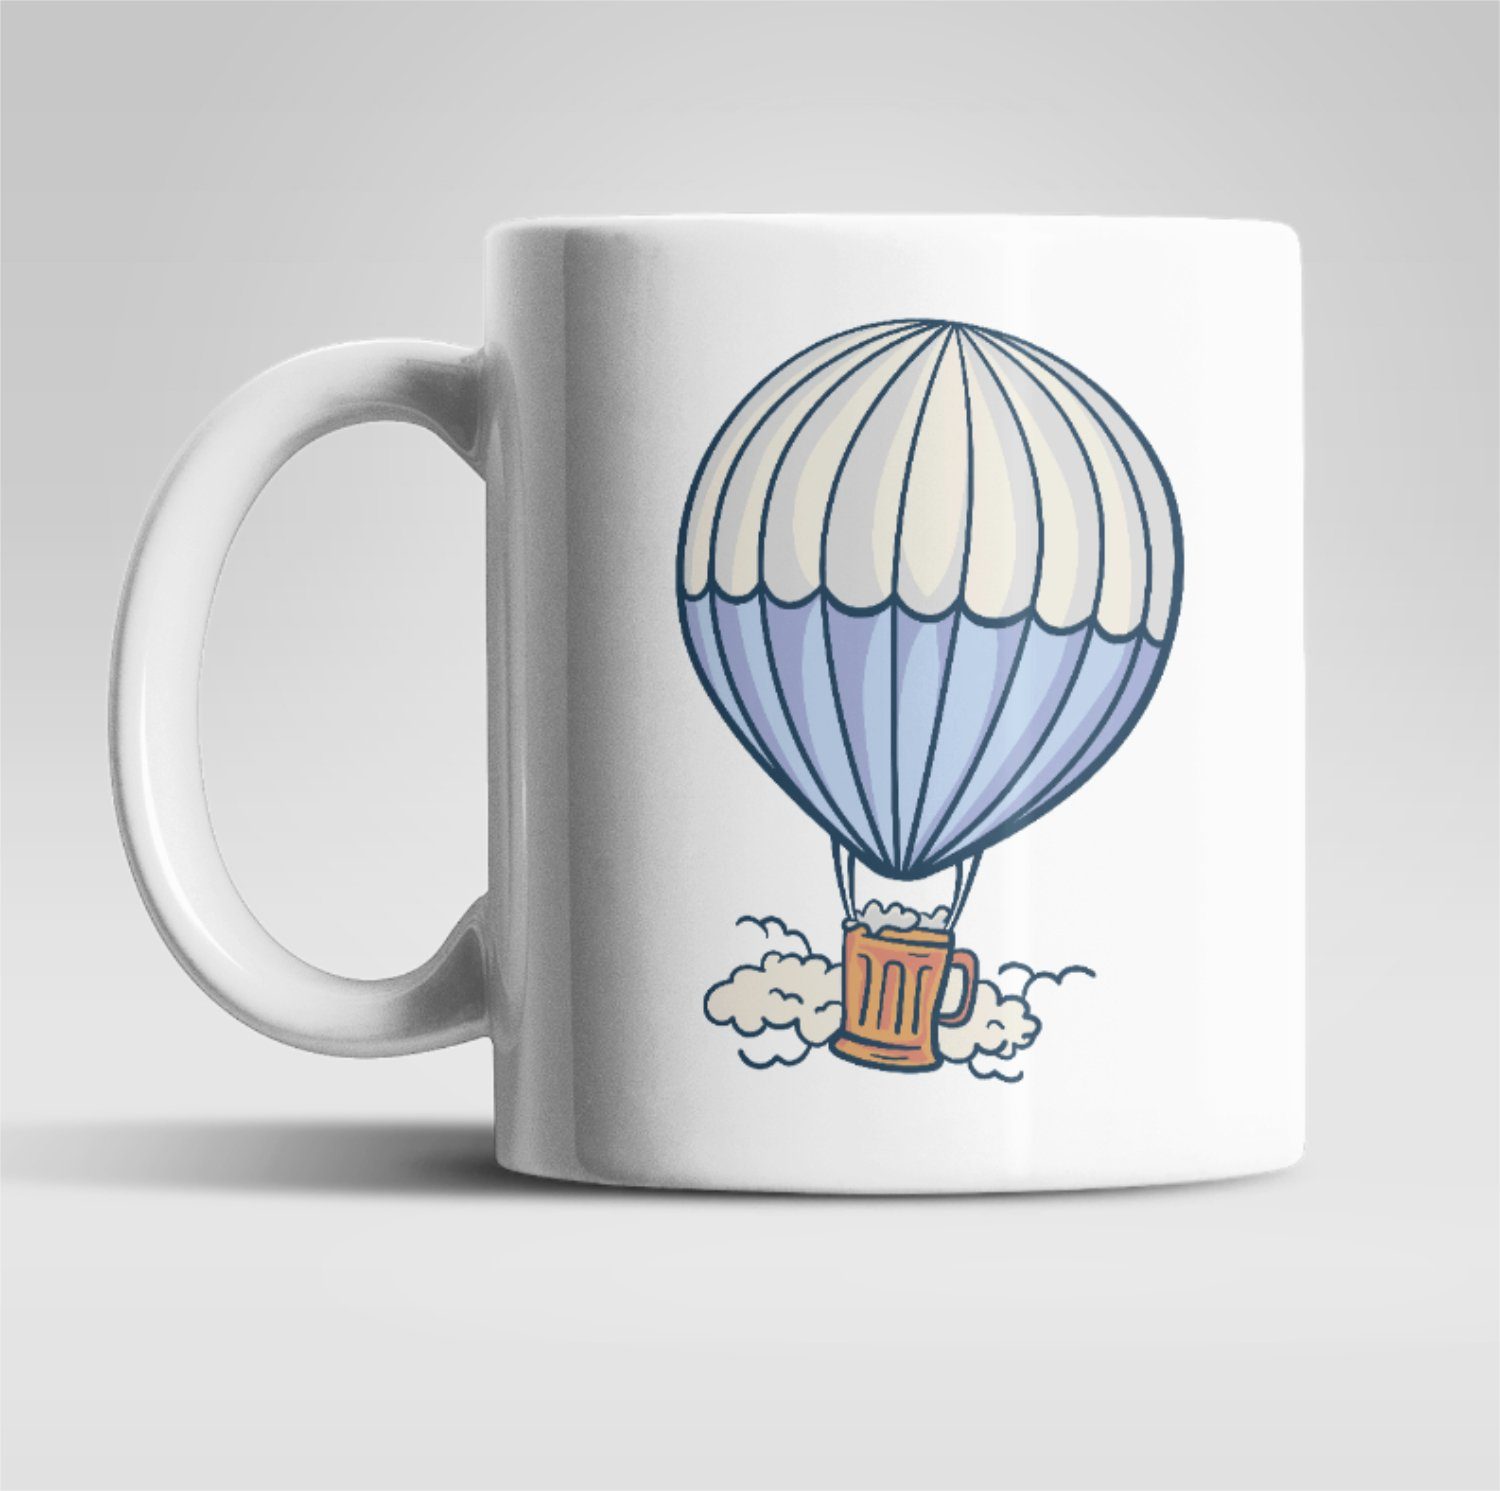 330 WS-Trend Ballon Teetasse Geschenkidee, Tasse ml Keramik, Kaffeetasse Bier